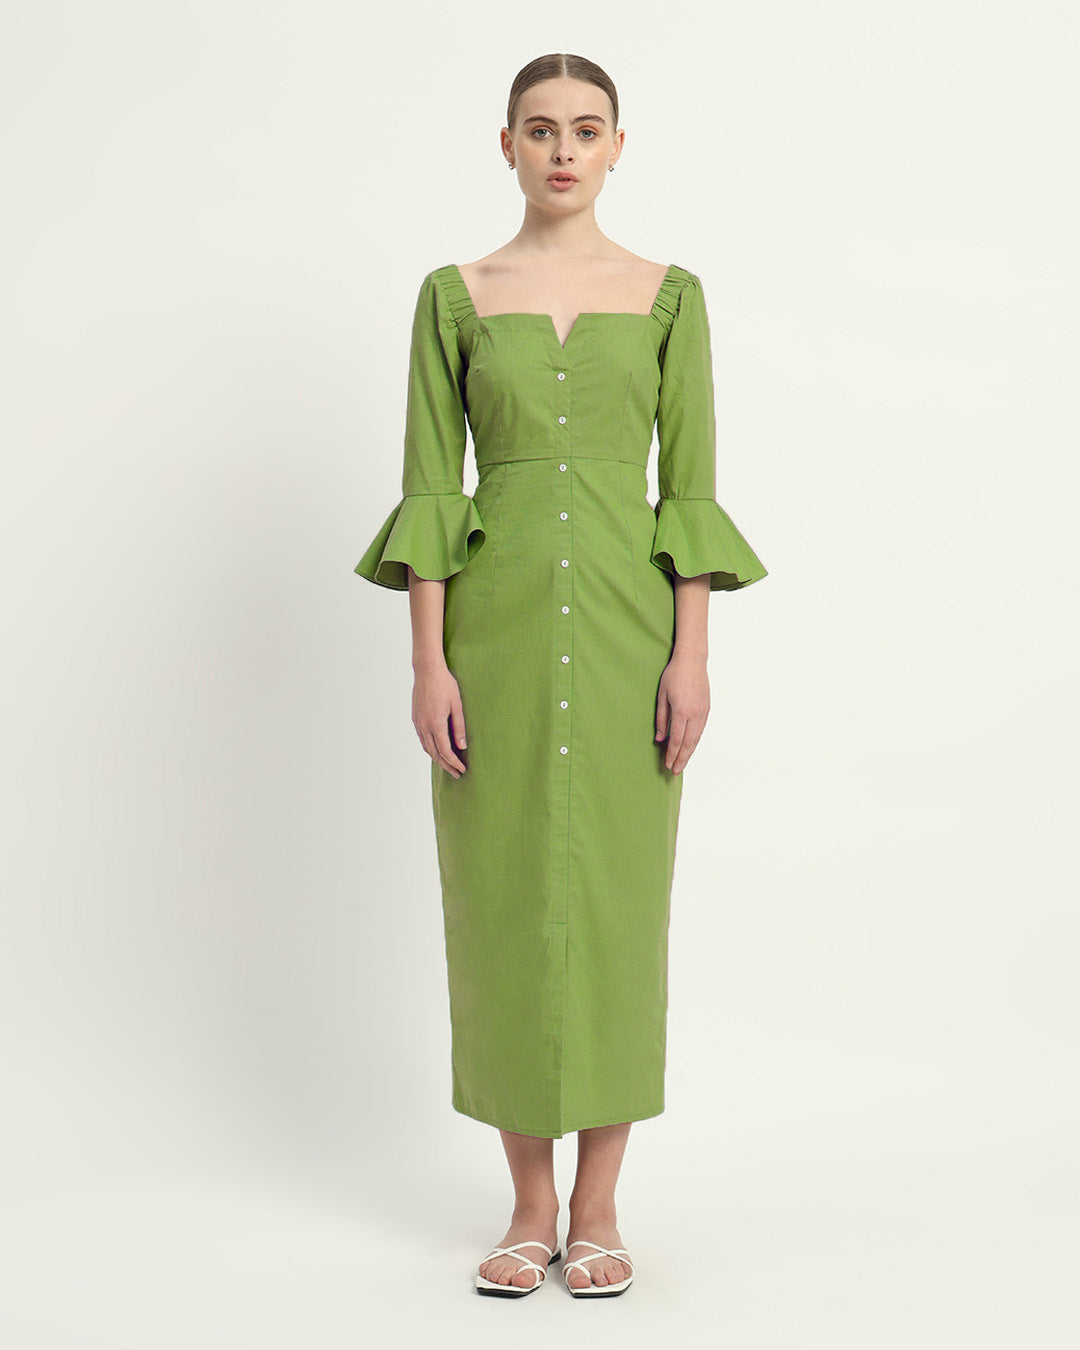 The Rosendale Fern Cotton Dress